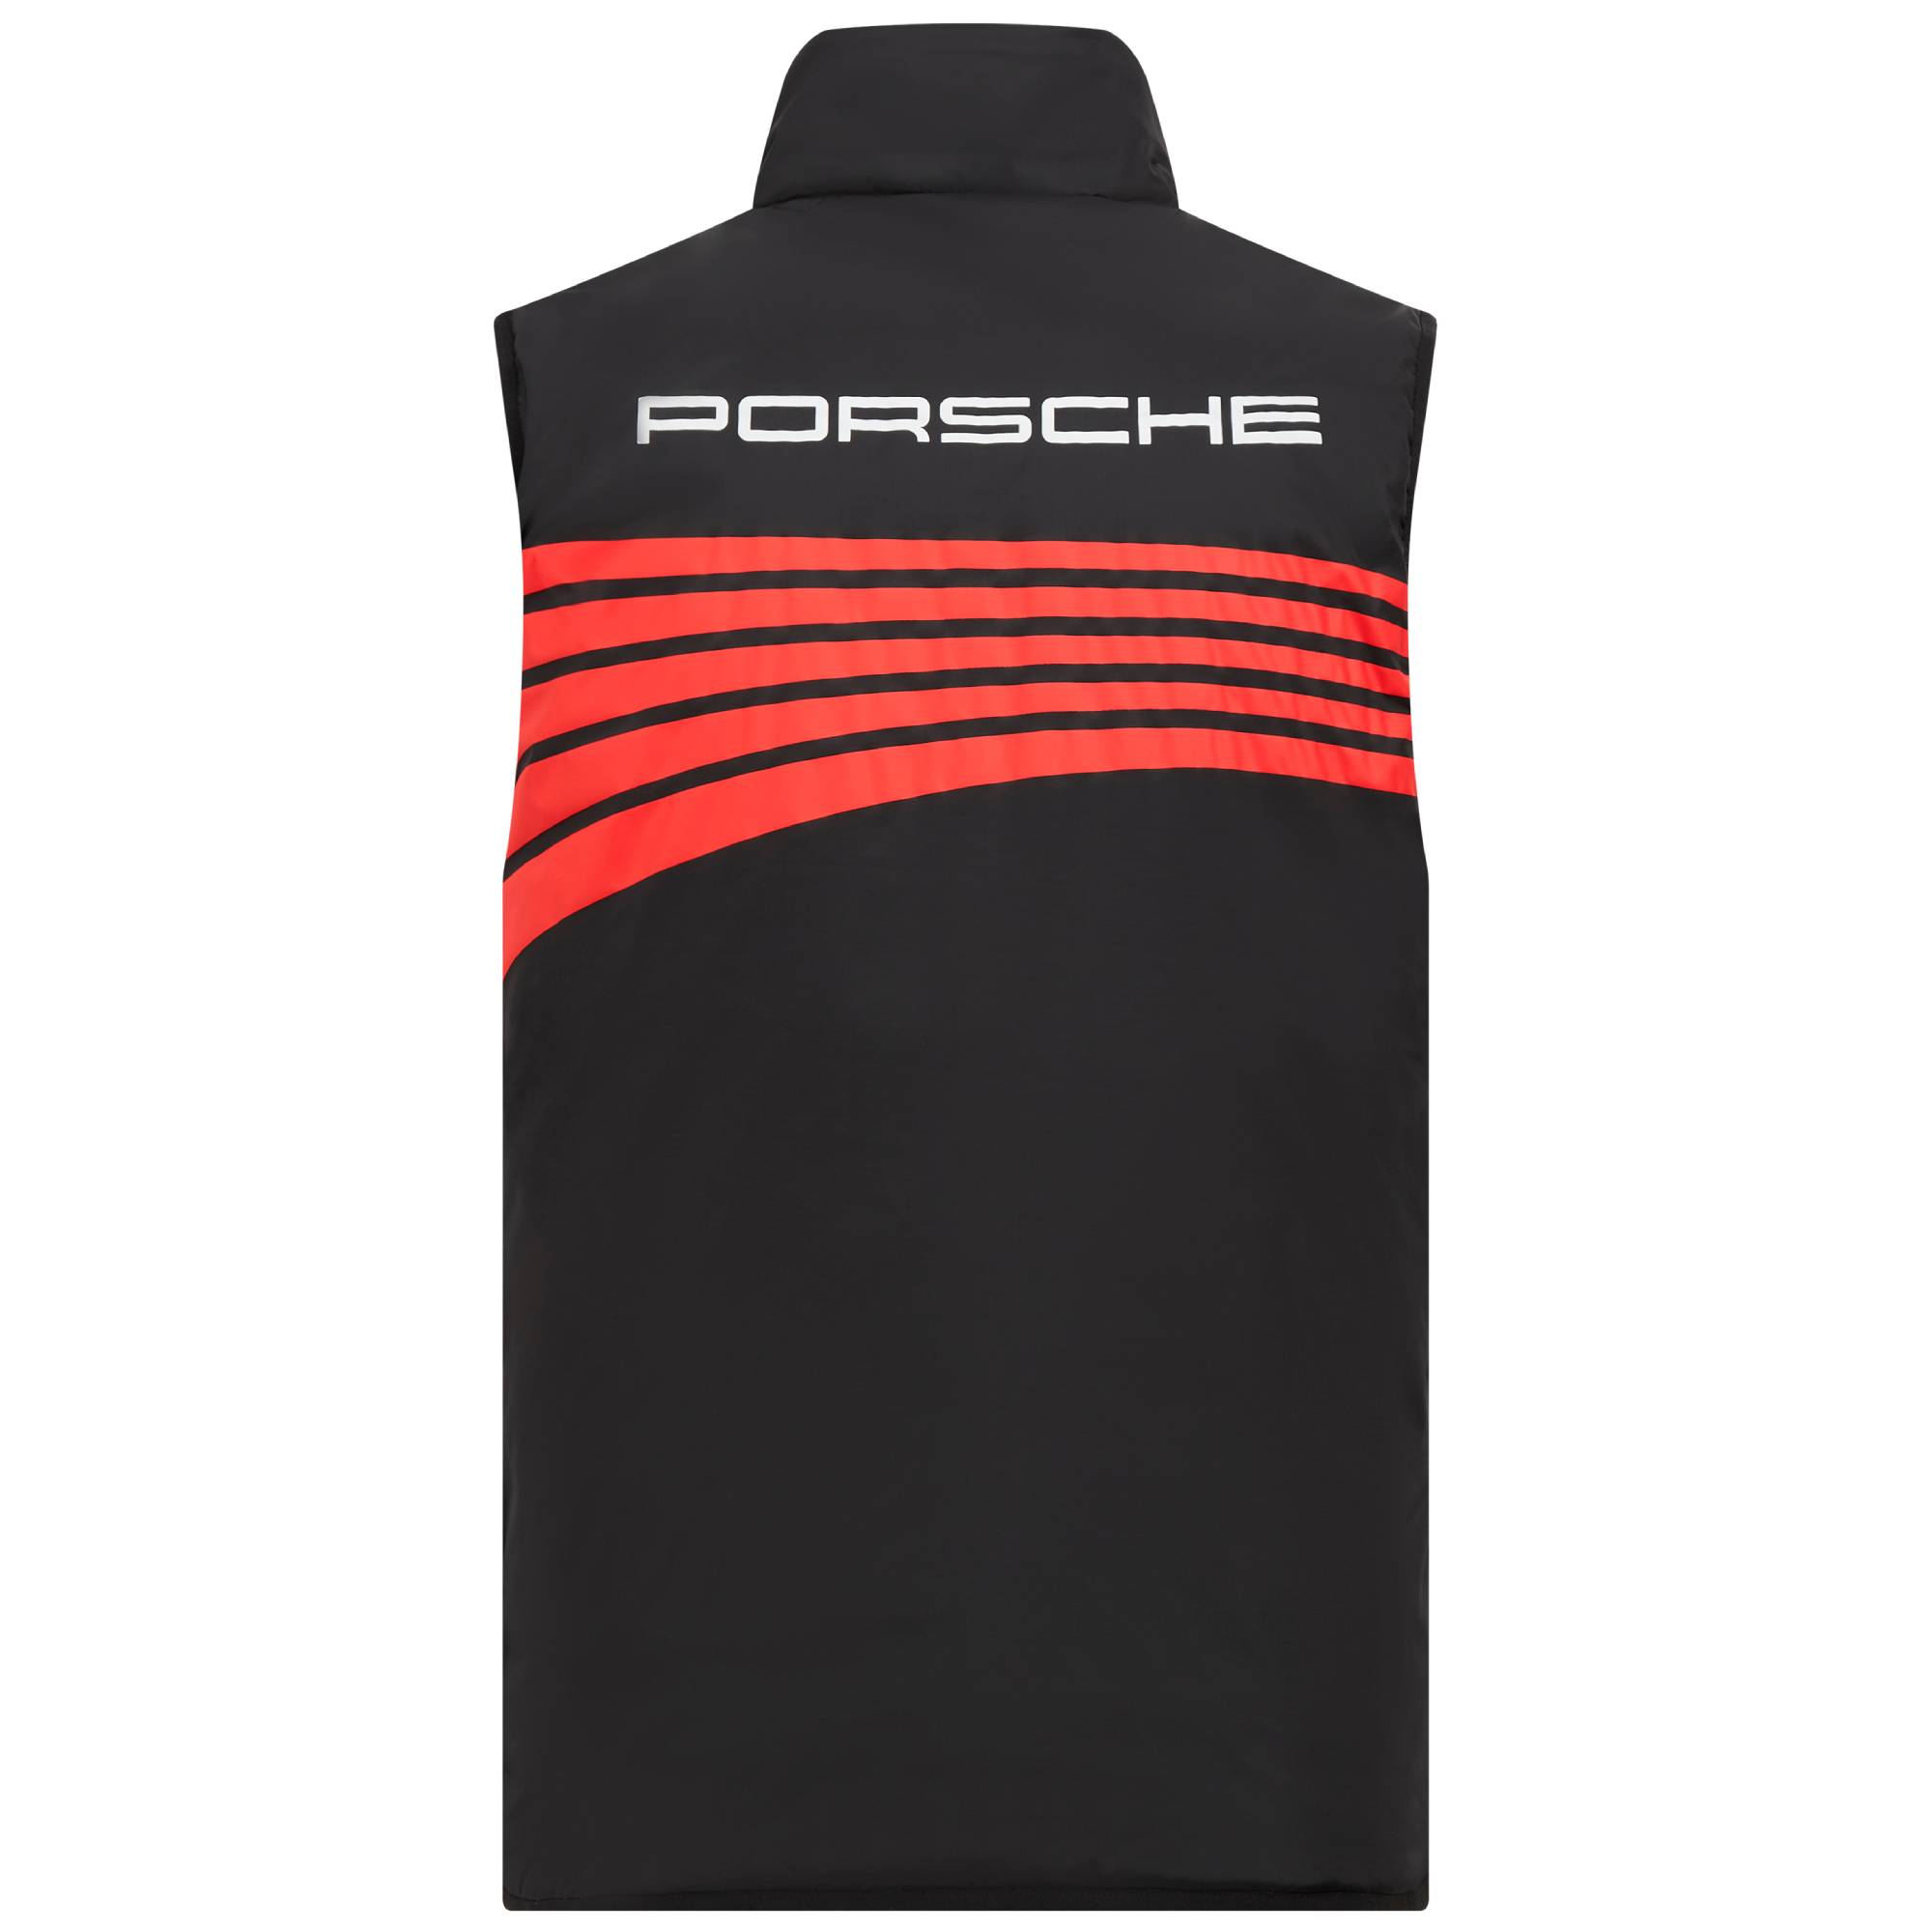 Porsche Motorsport Weste "Penske Motorsport" - schwarz